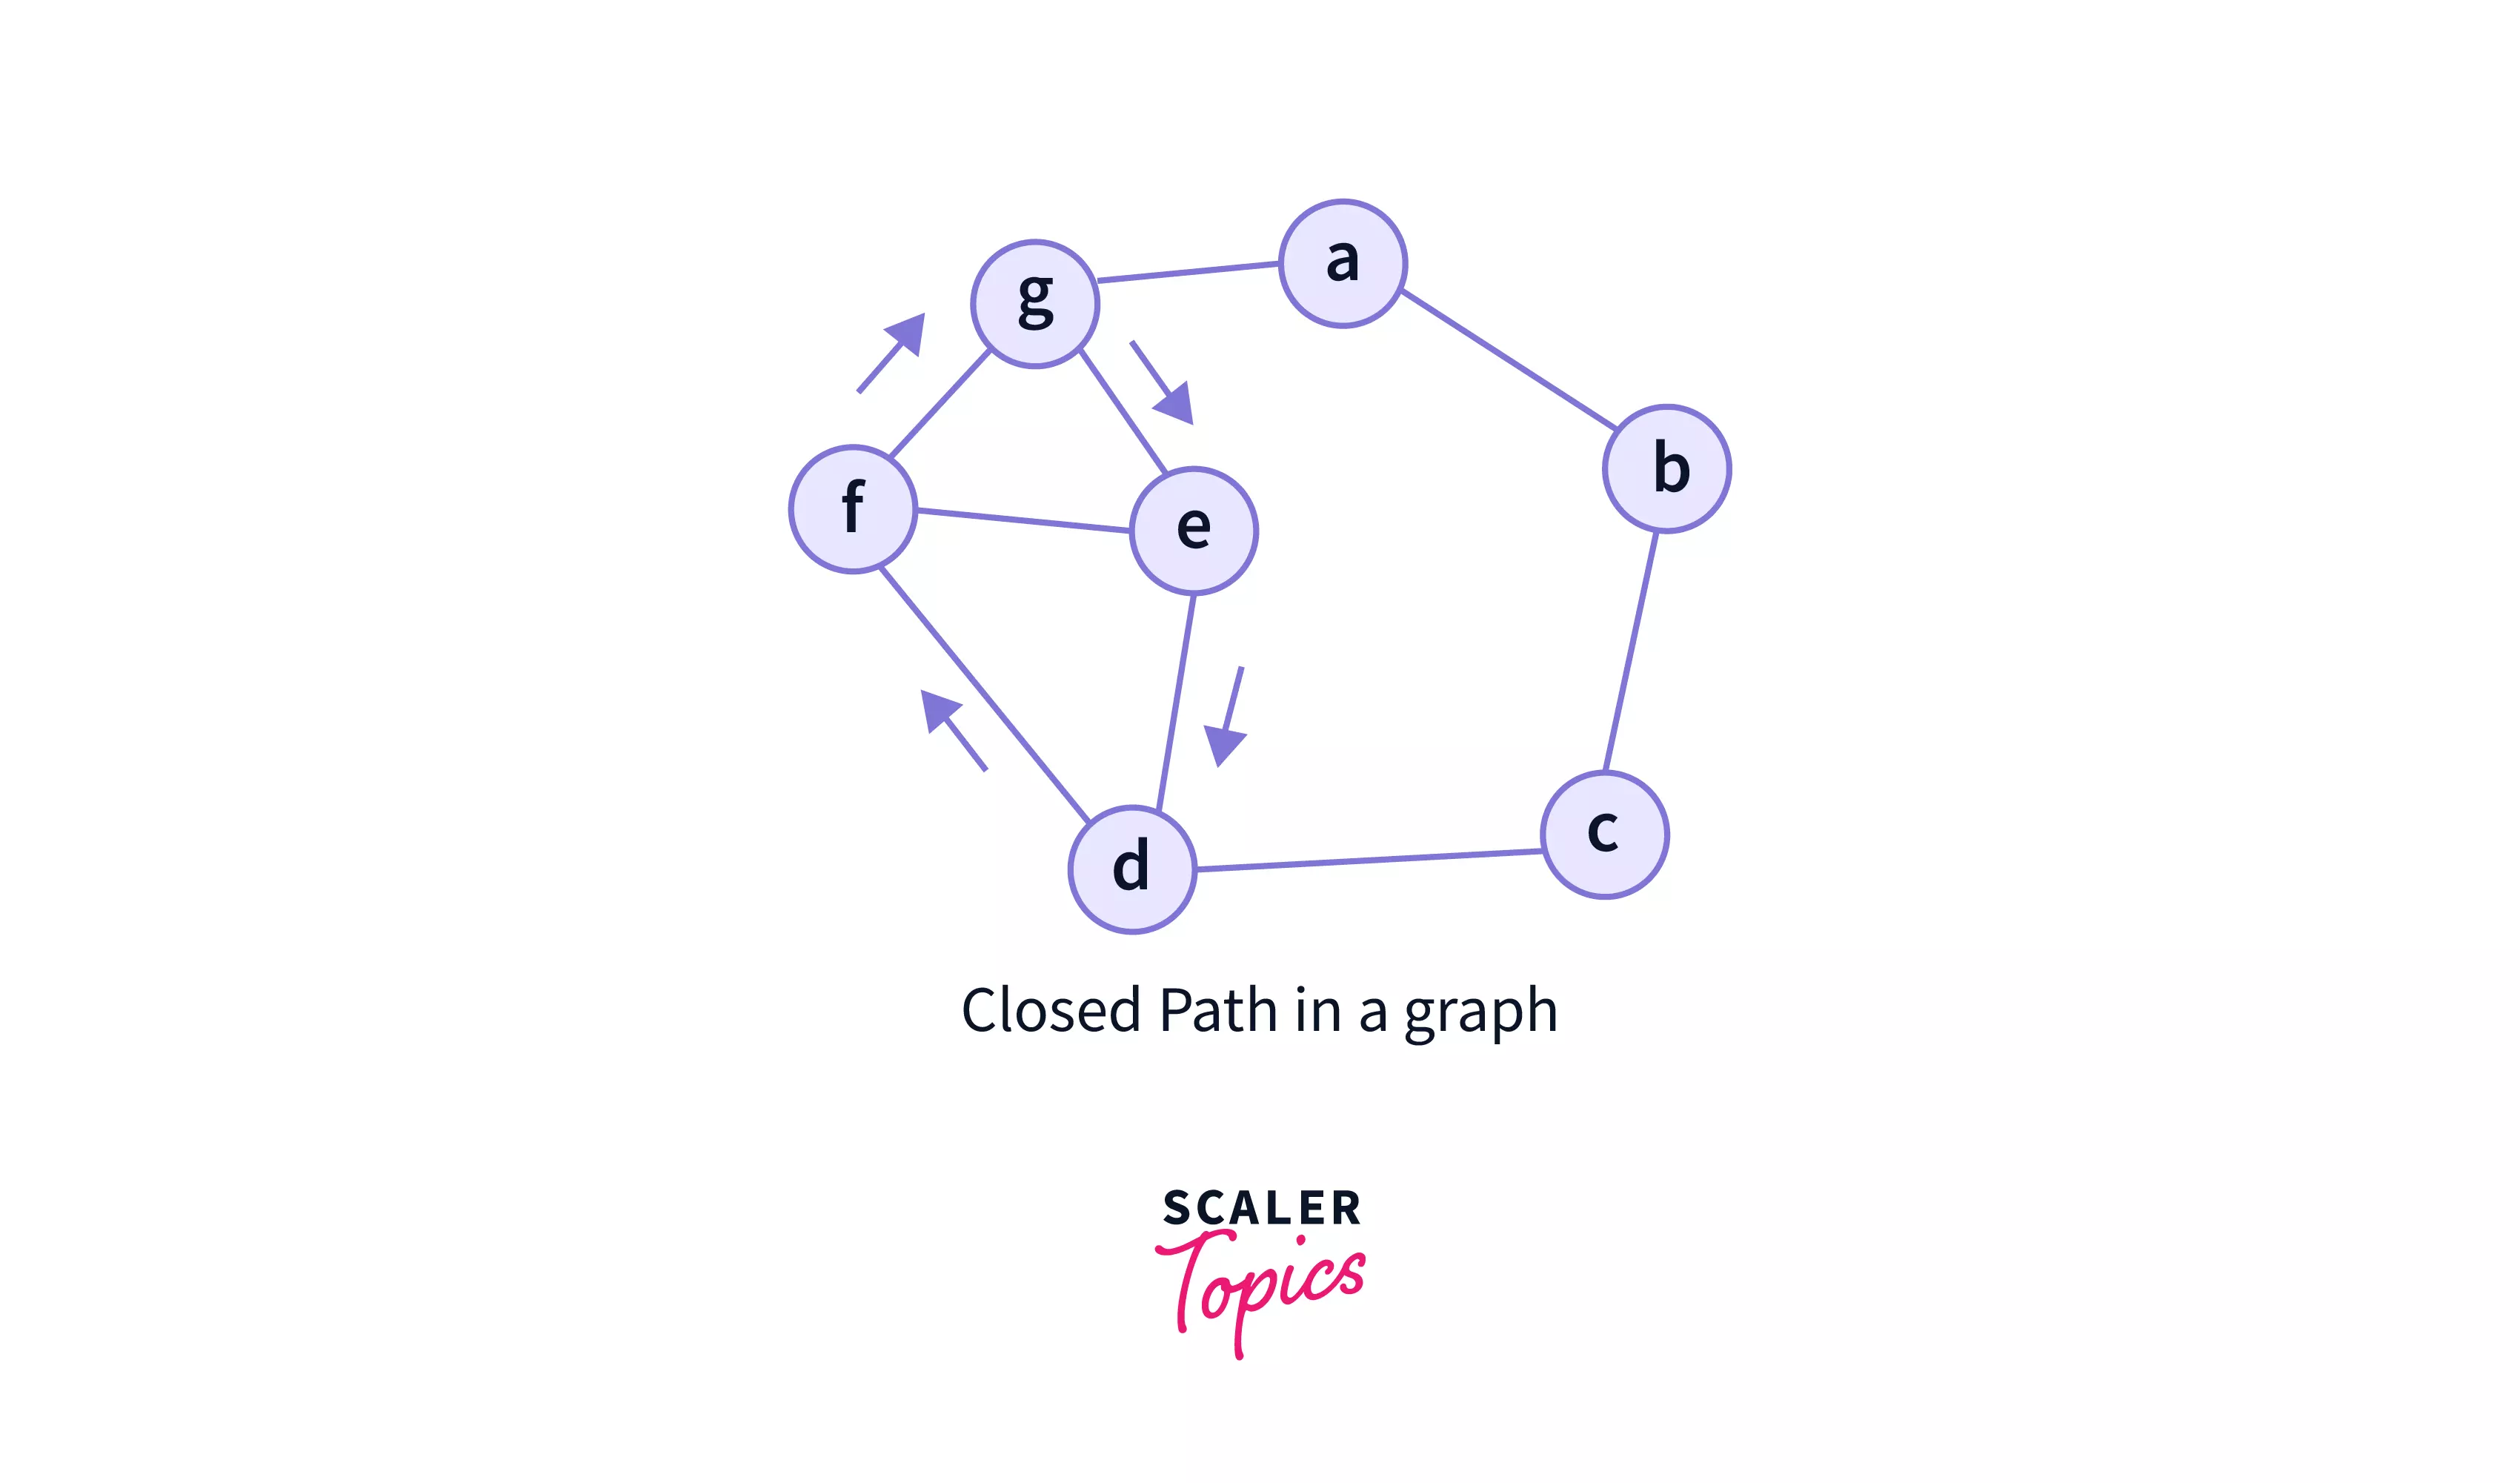 Closed Path in a graph